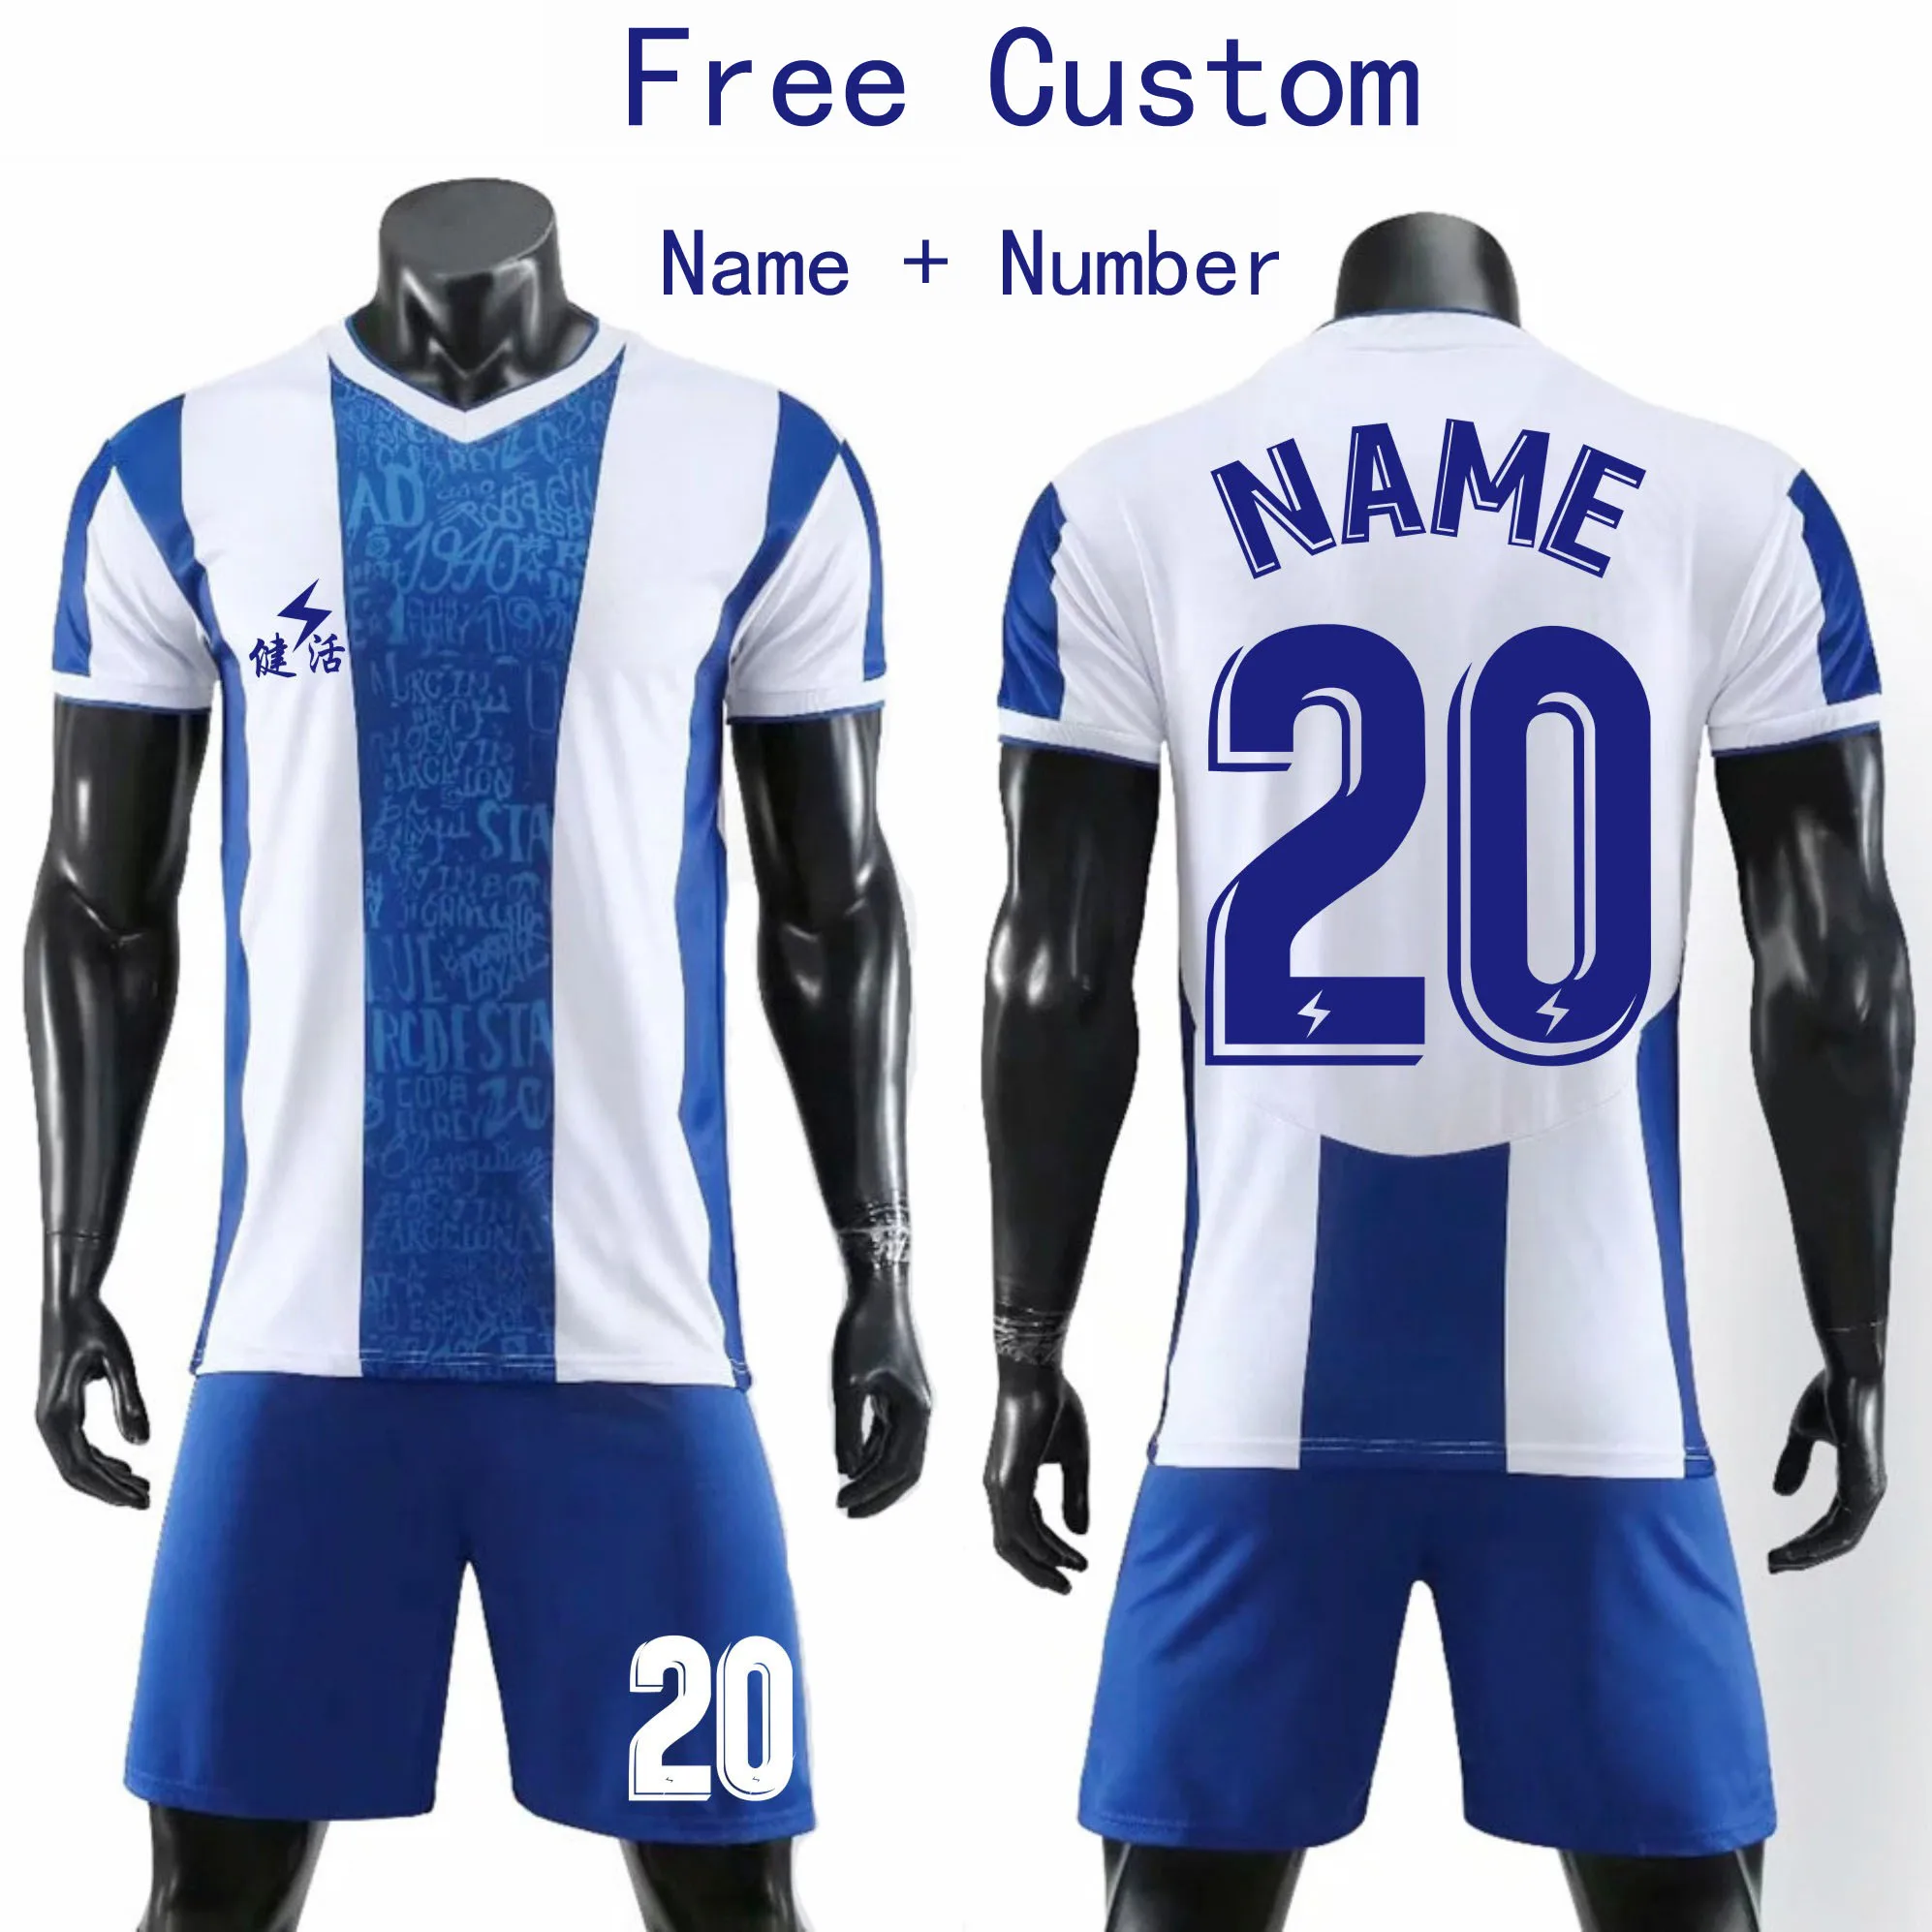 

19/20 New Season Blank Free Custom Futbol Uniforms, Men & Kid Football Tee shirt + Shorts, Survetement Soccer Kits training Suit